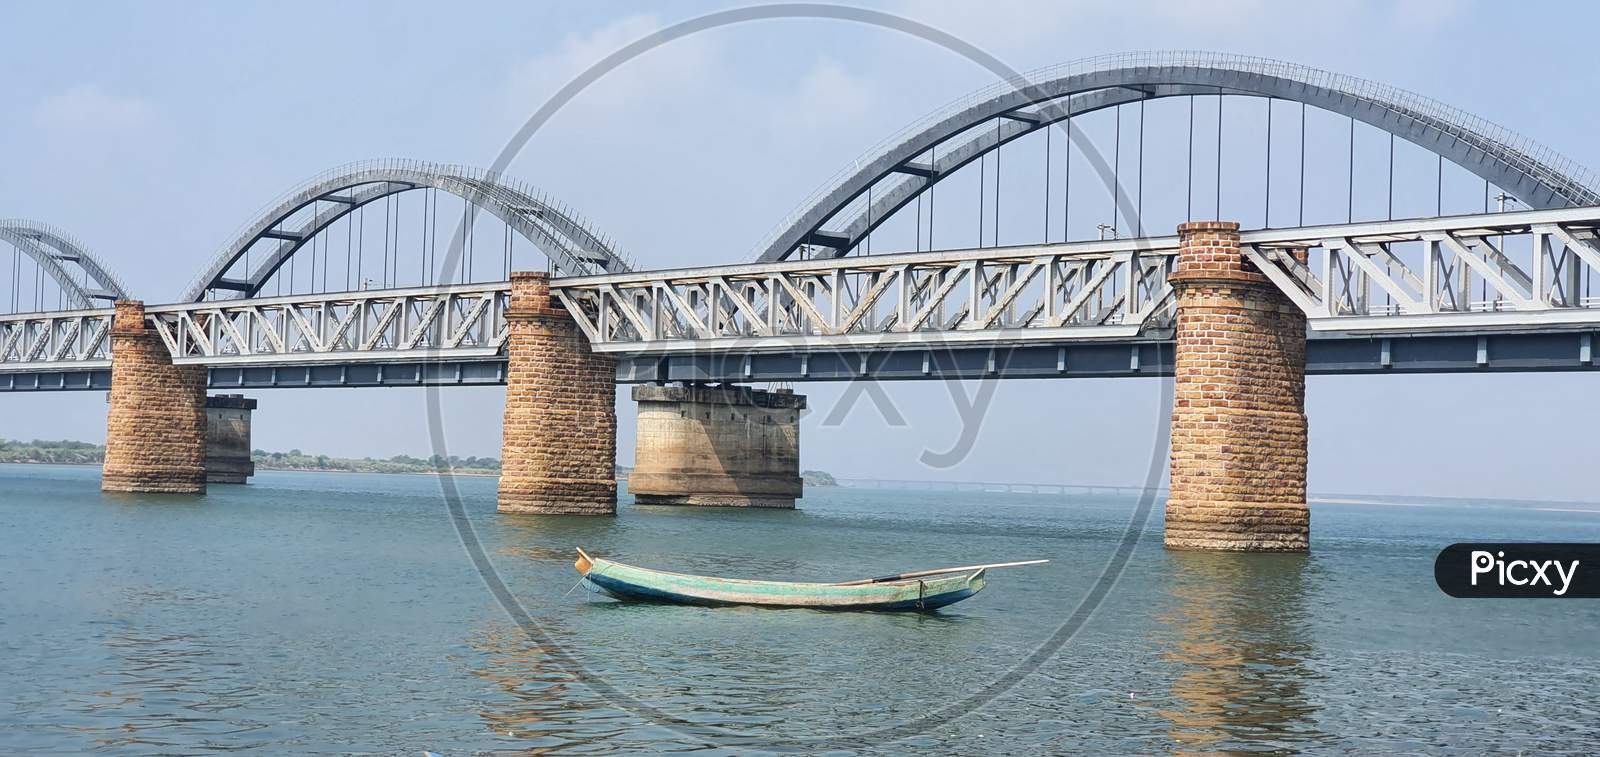 Fishing boat against the backdrop of railway bridges on Godavari river